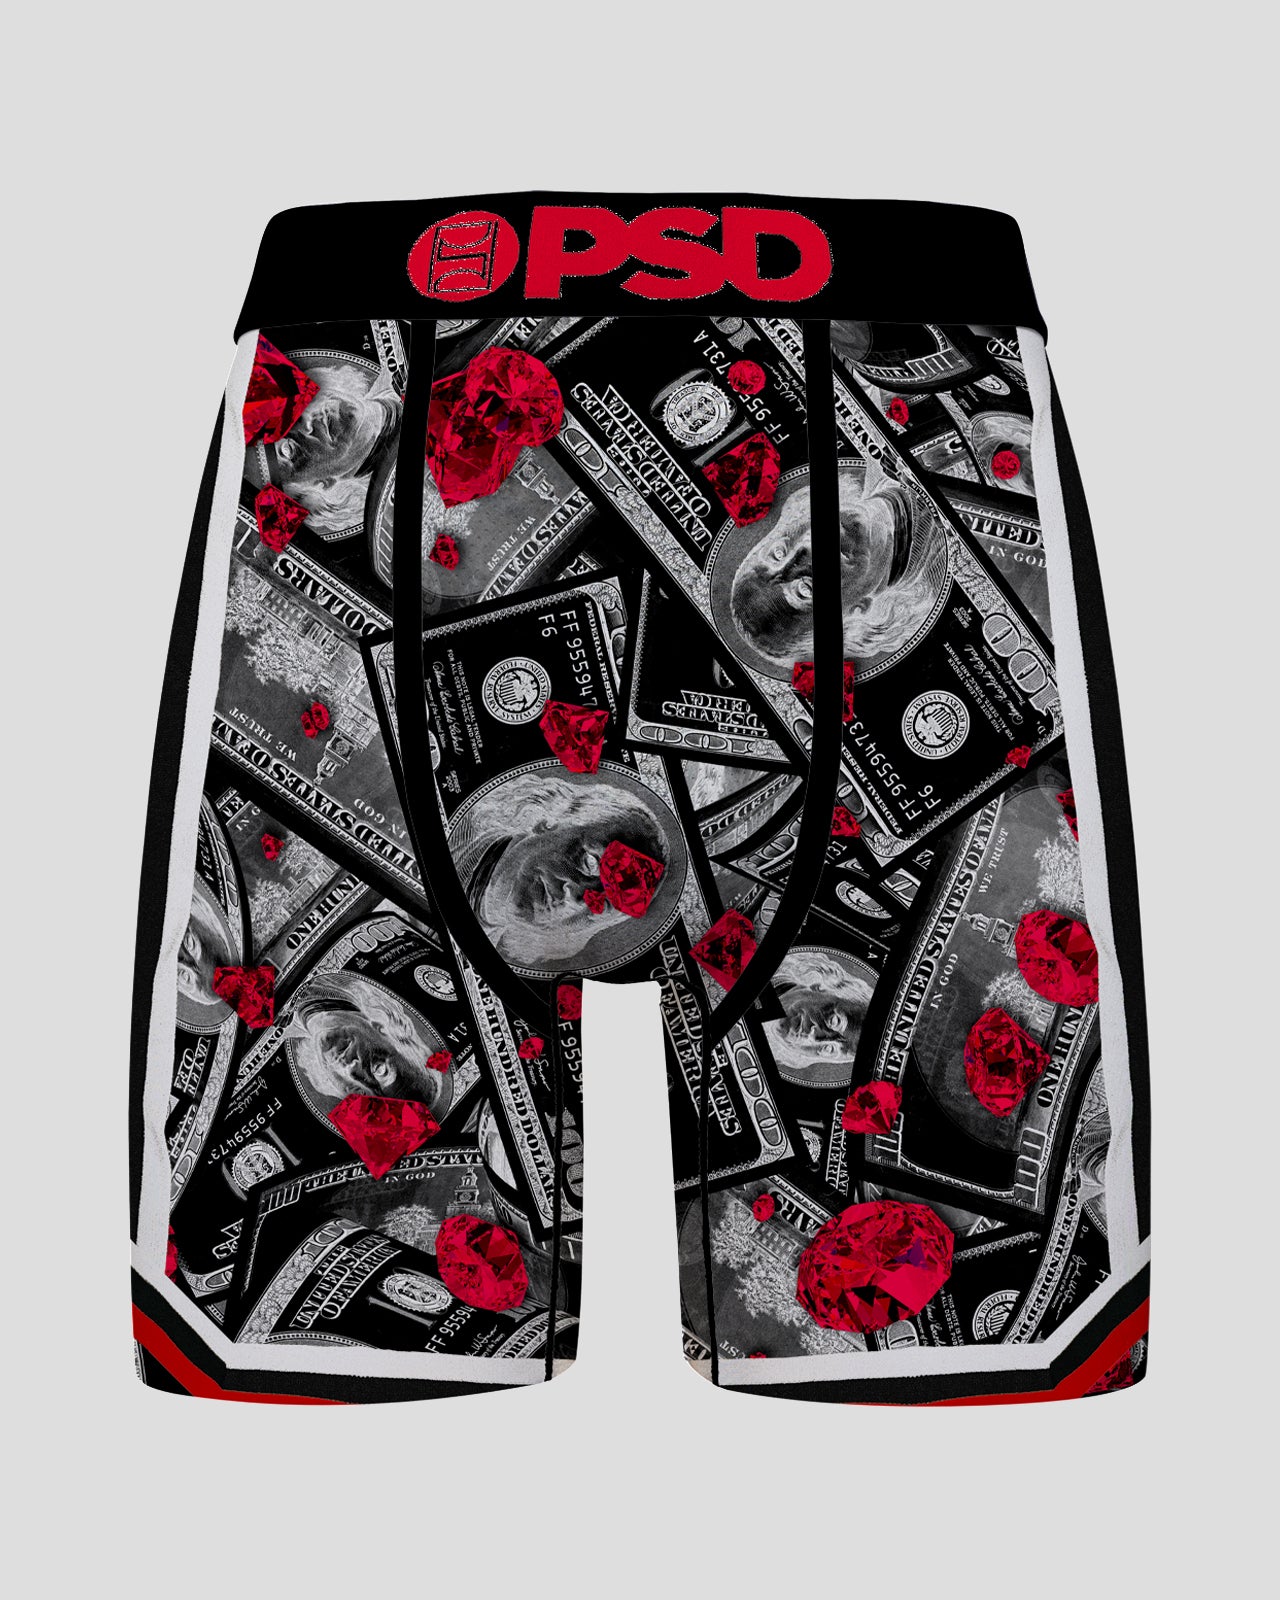 PSD Luxe Two Tone Stretch Boxer Briefs - Men's Boxers in Multi